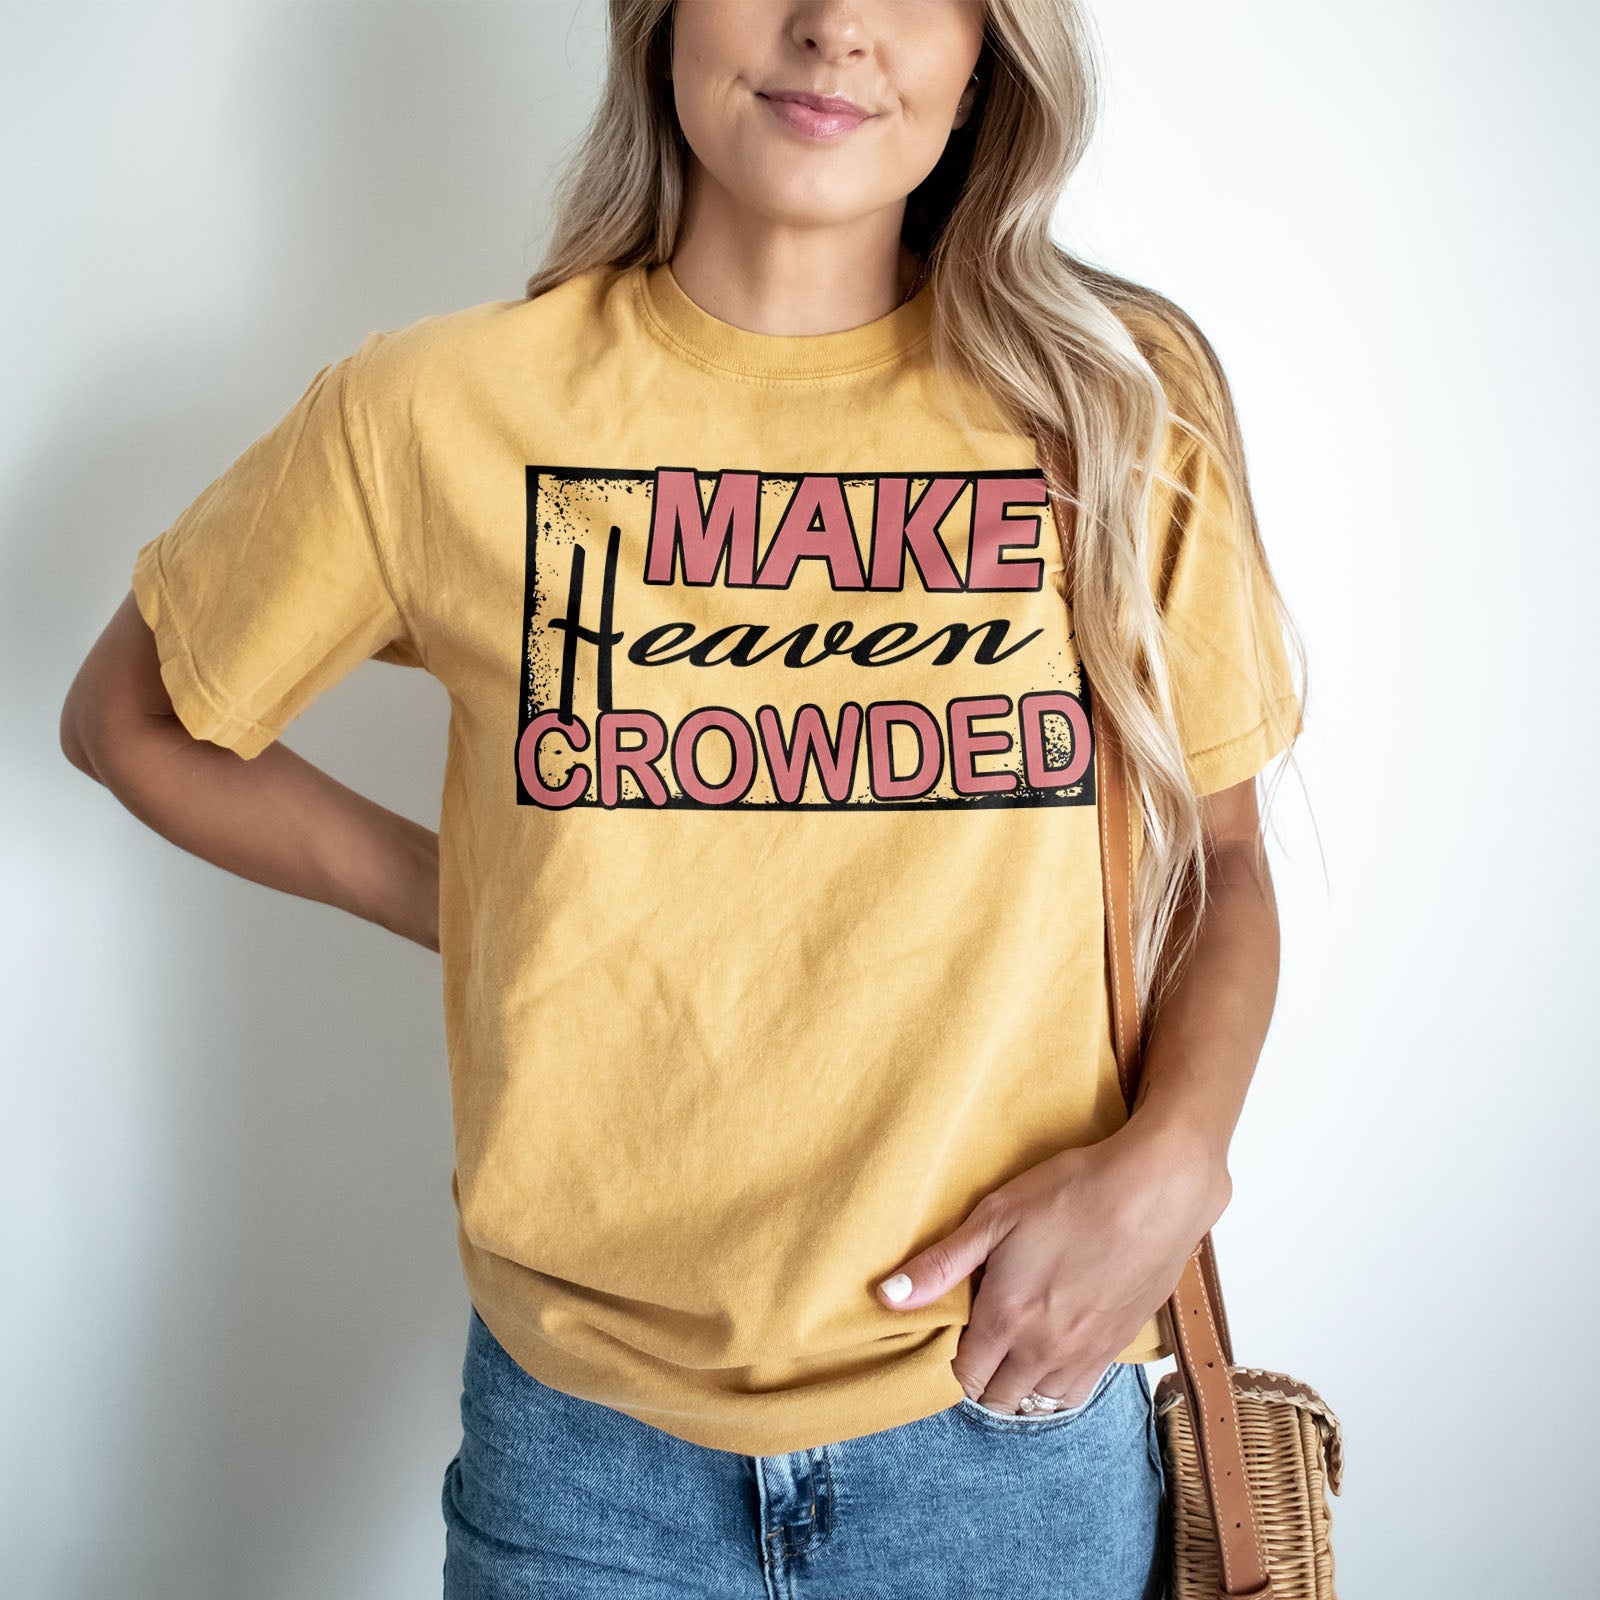 Make Heaven Crowded Tee Shirts For Women - Christian Shirts for Women - Religious Tee Shirts